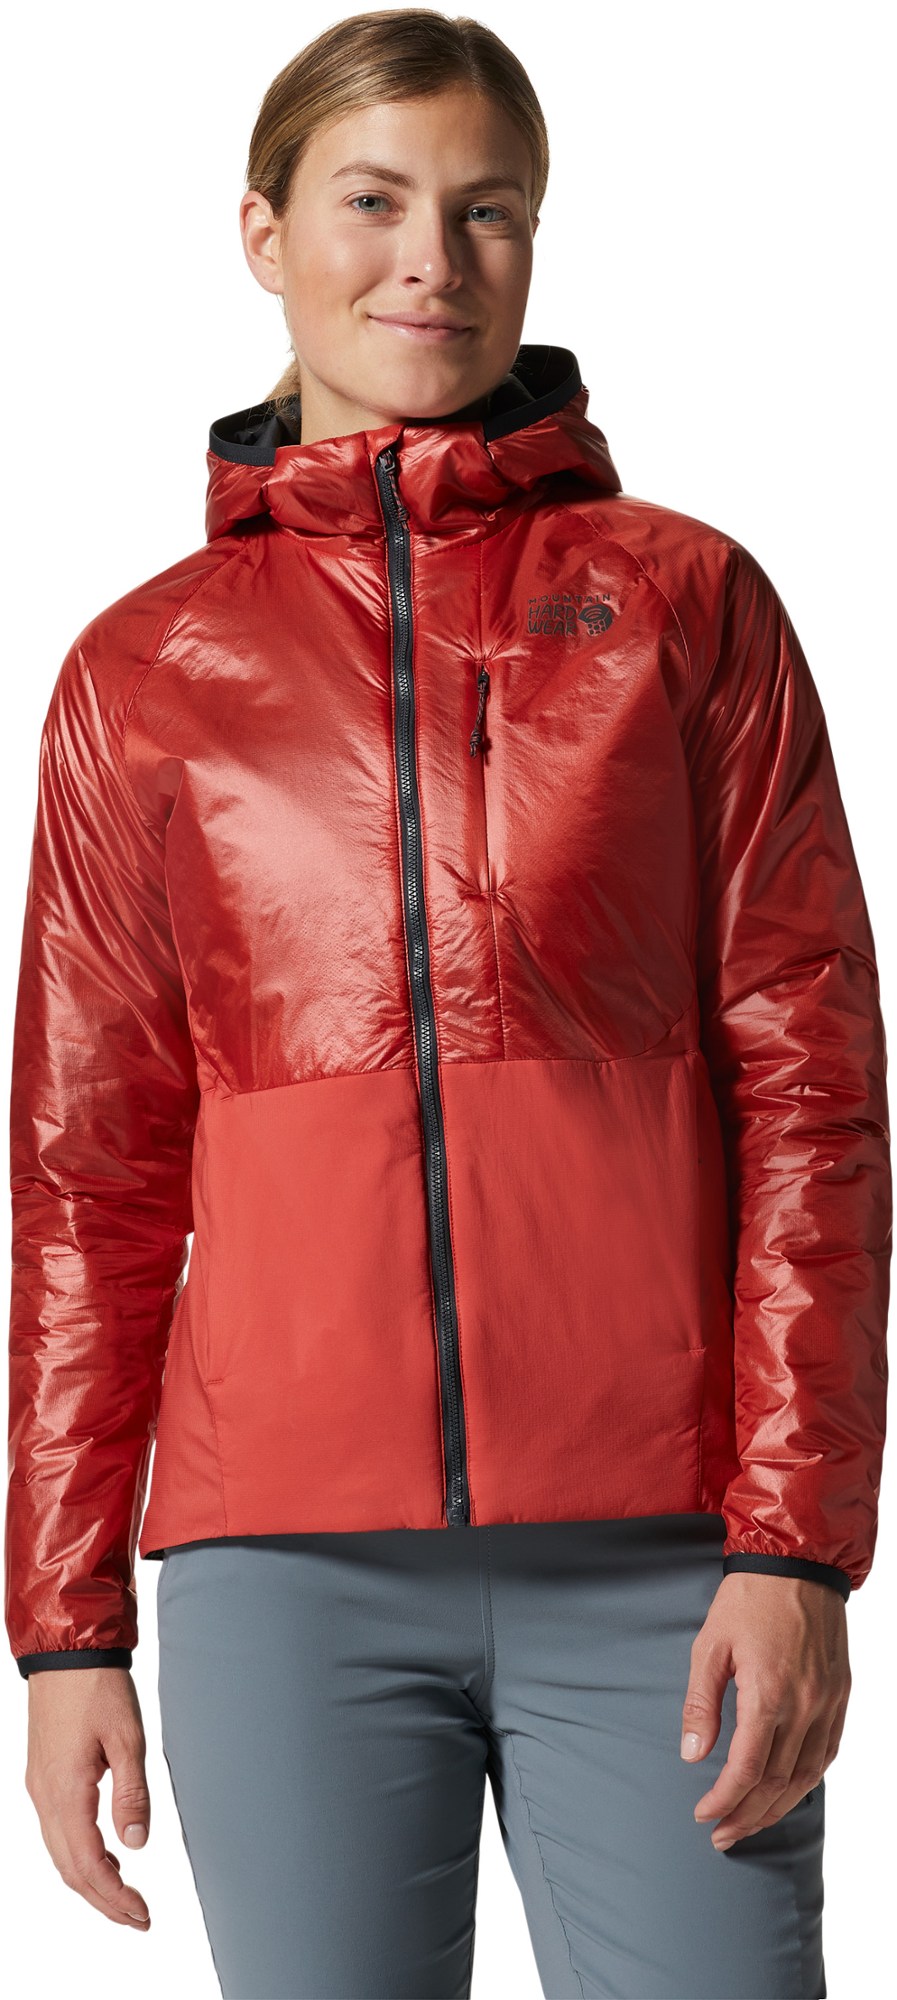 mountain hardwear jacket from rei holiday warm up sale